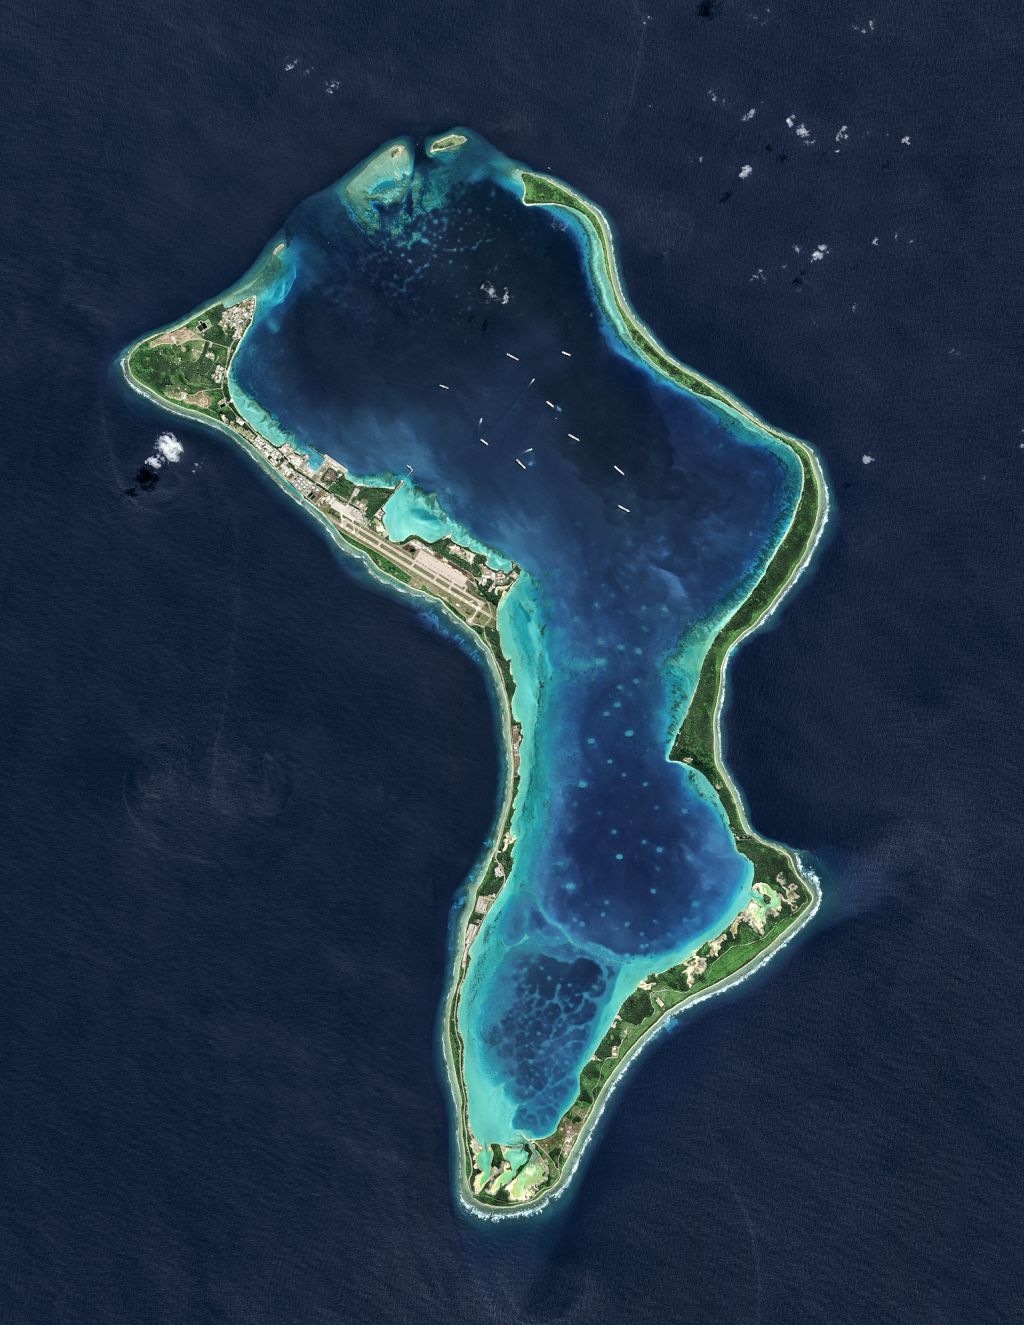 Satellite view of the Diego Garcia